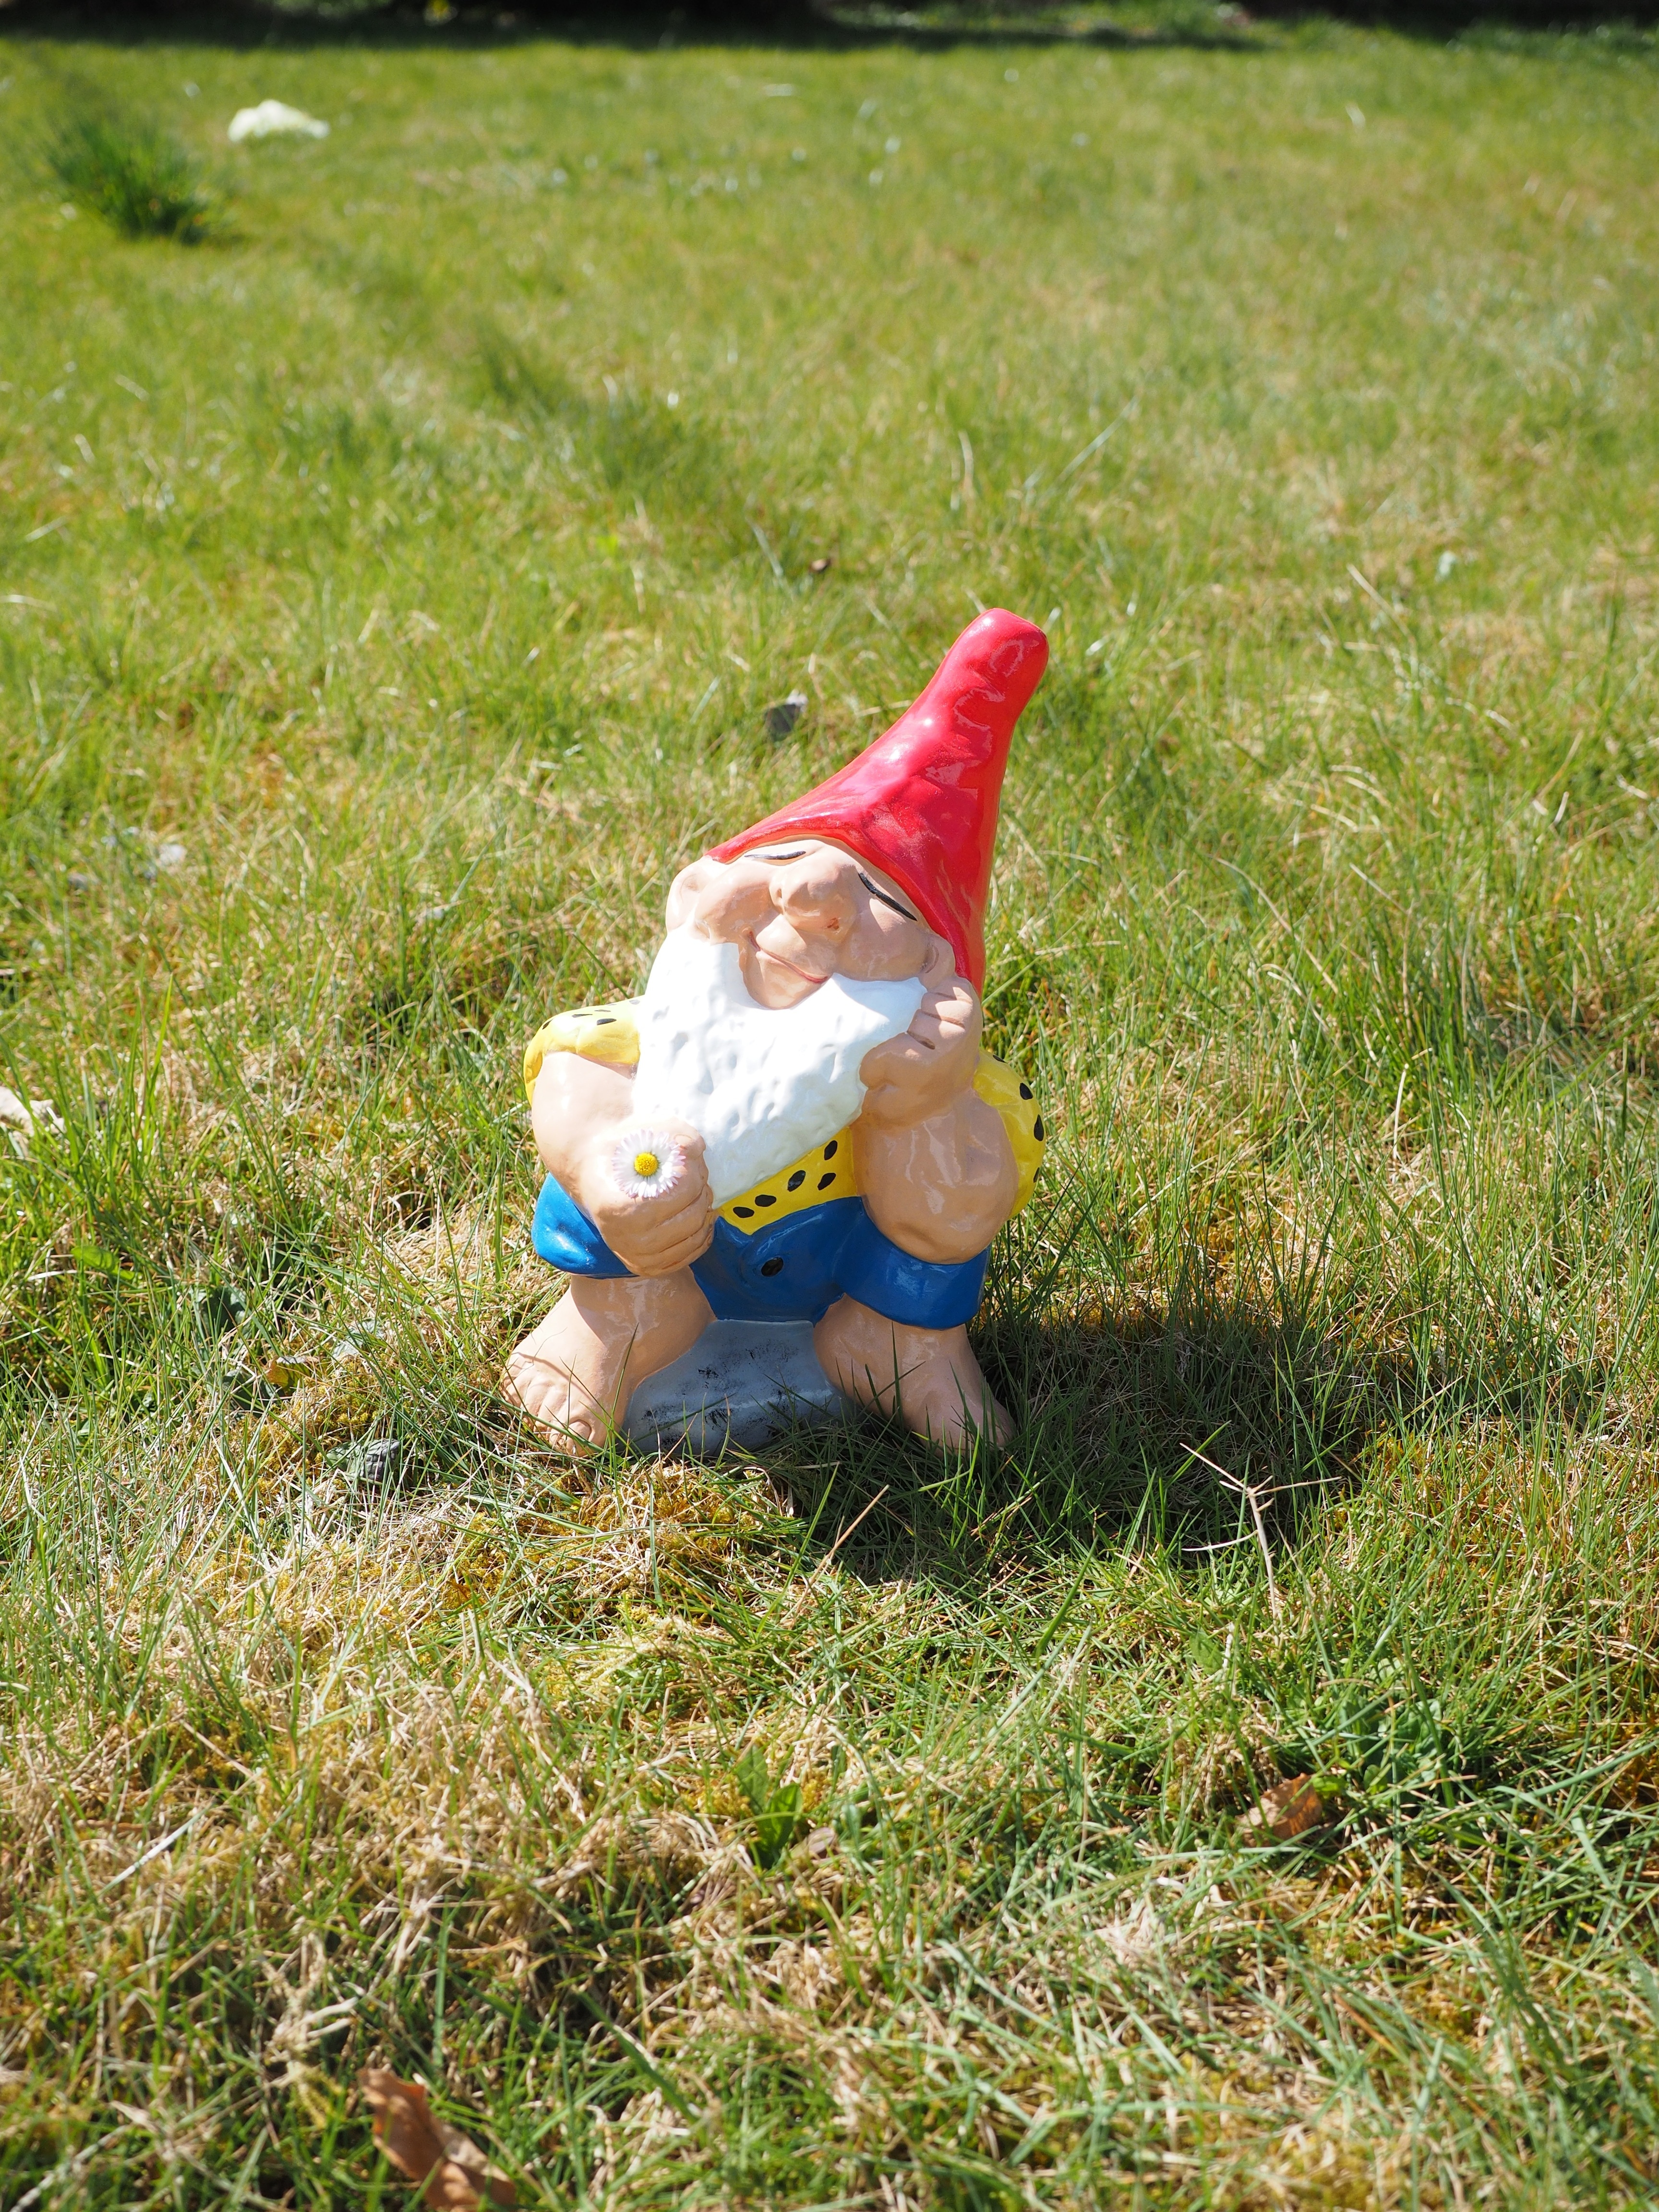 Dwarf, Garden Gnome, Satisfied, Blessed, grass, childhood